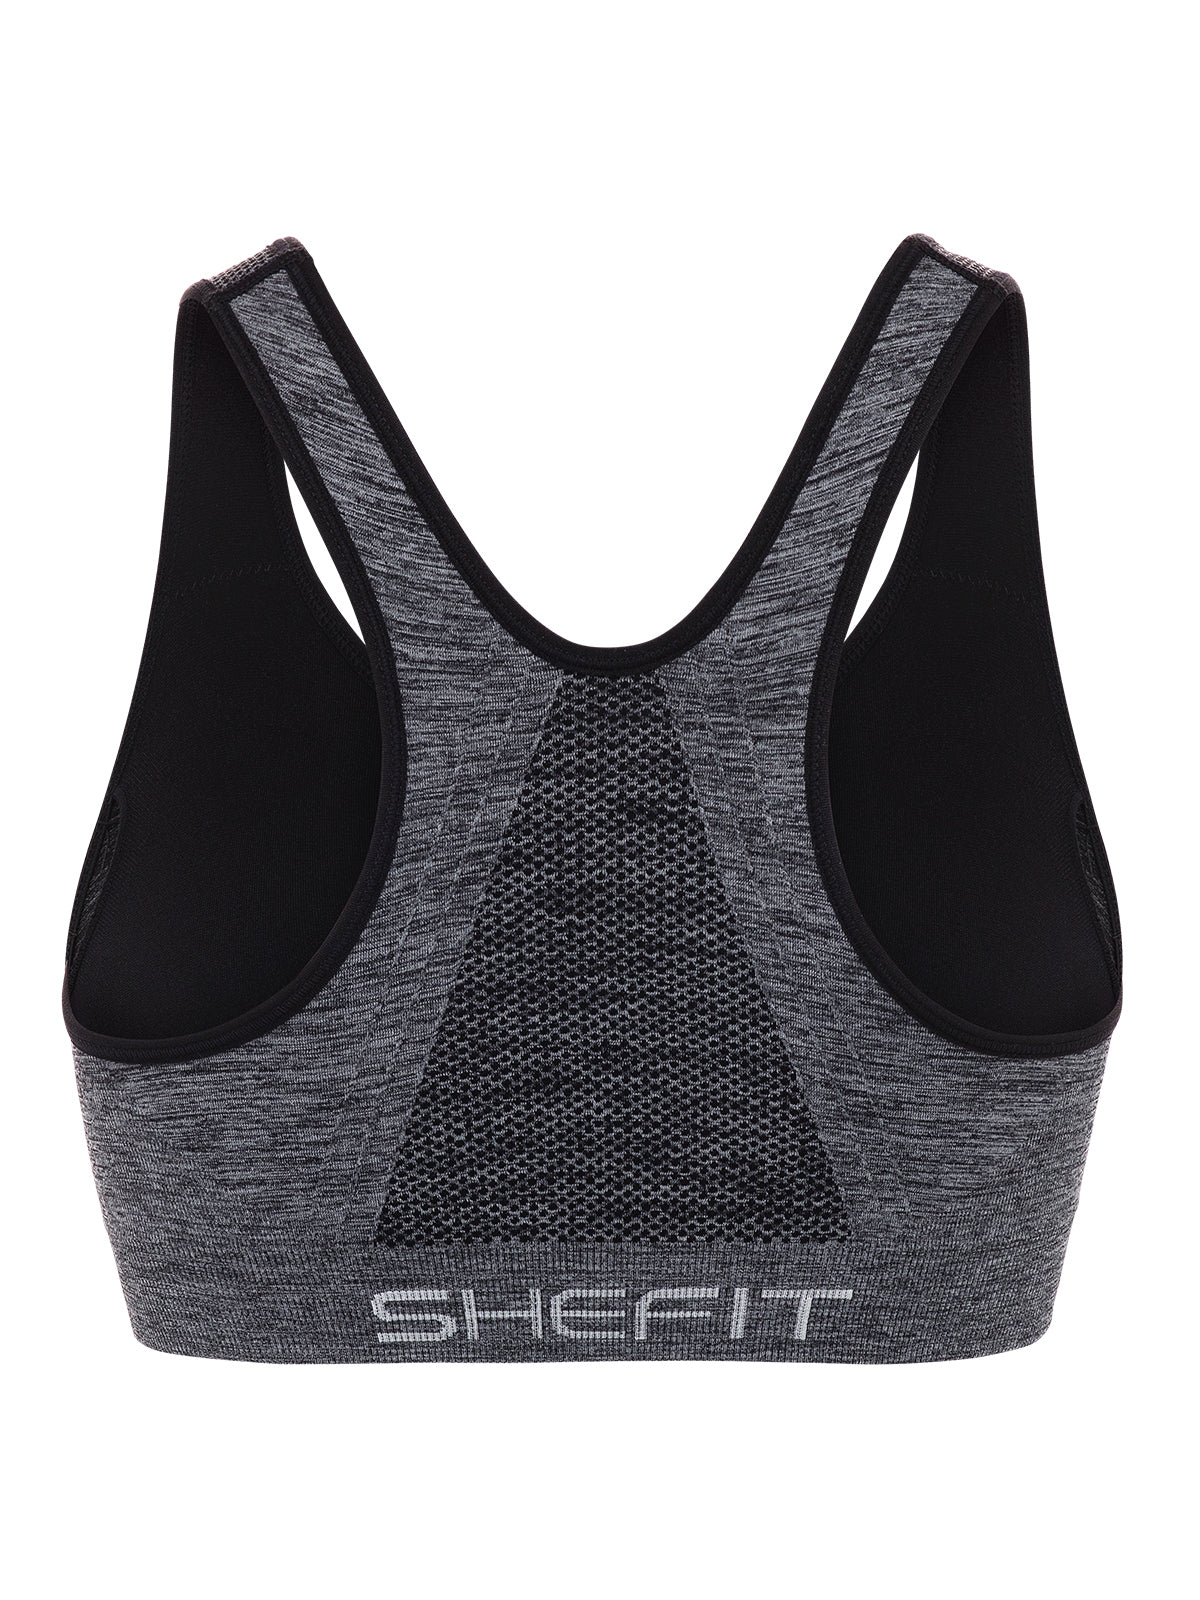 SHEFIT Perfect Lounge Bra Black Size Small New Low Impact Everyday Wear